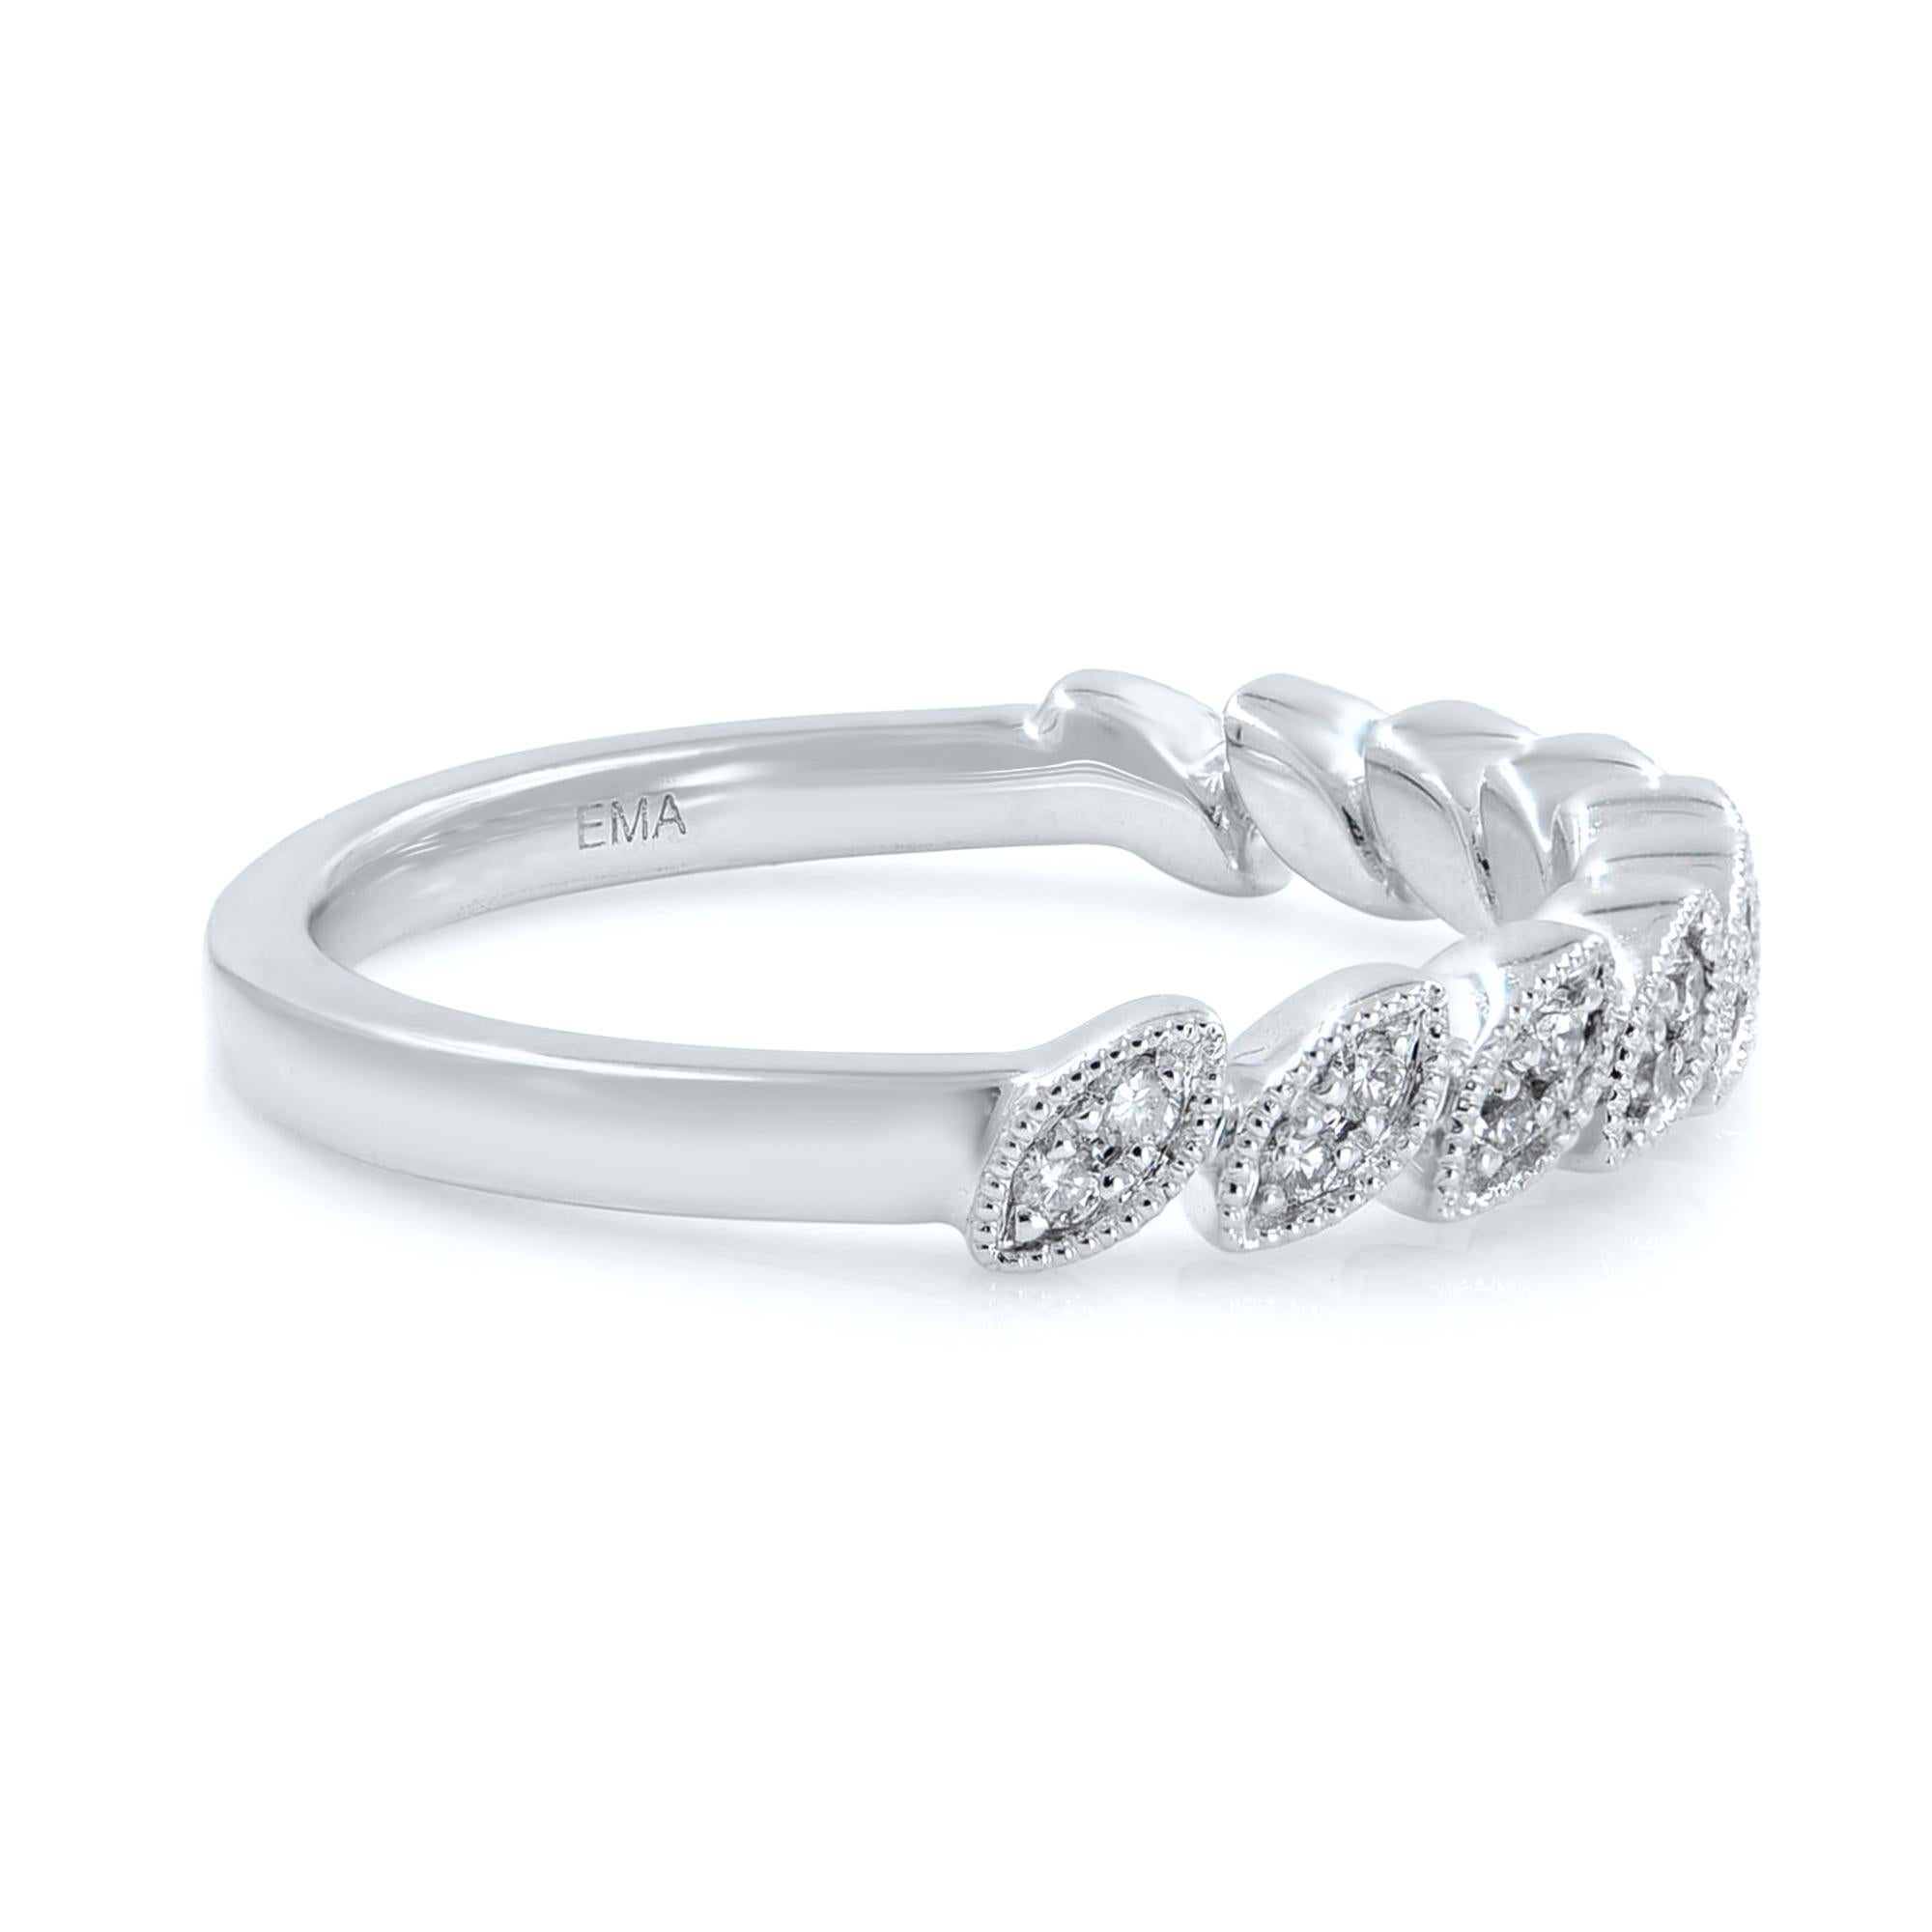 Round Cut Rachel Koen Stackable Milgrain Diamond Ring Band 14k White Gold 0.15Cttw For Sale